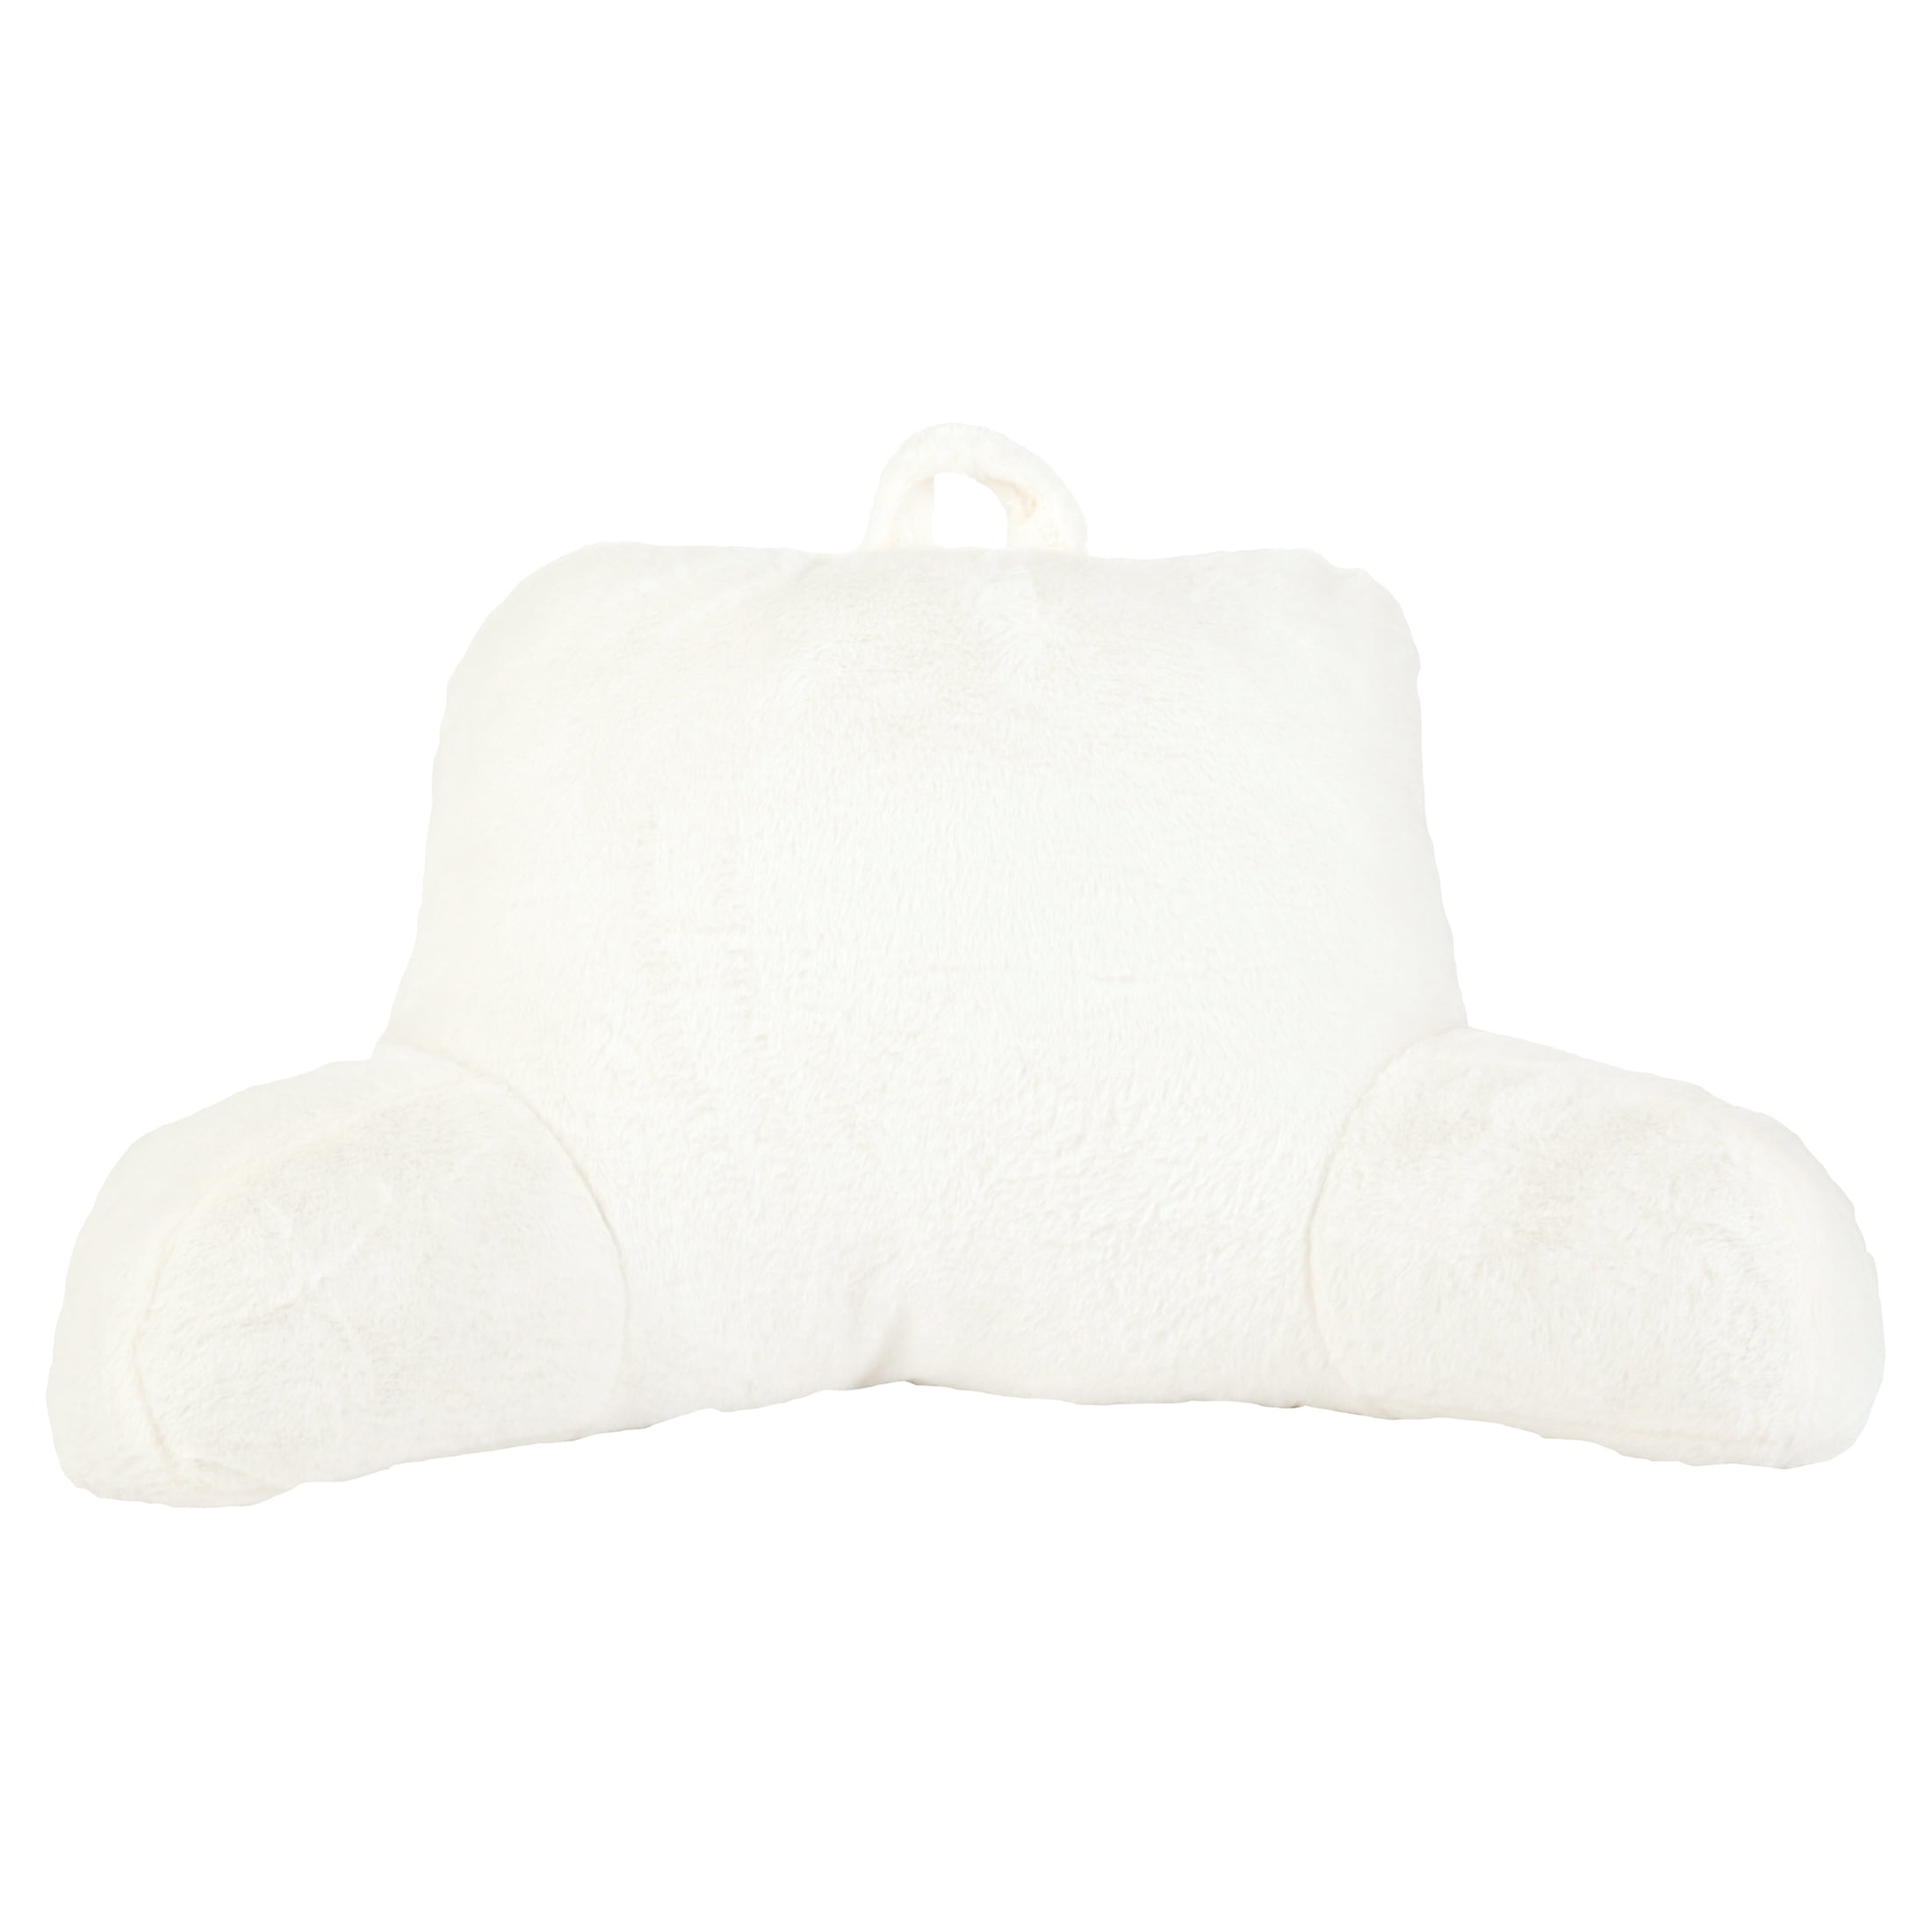 Mainstays Faux Fur Plush Bedrest Pillow, Specialty Size, Ivory, 1 Piece